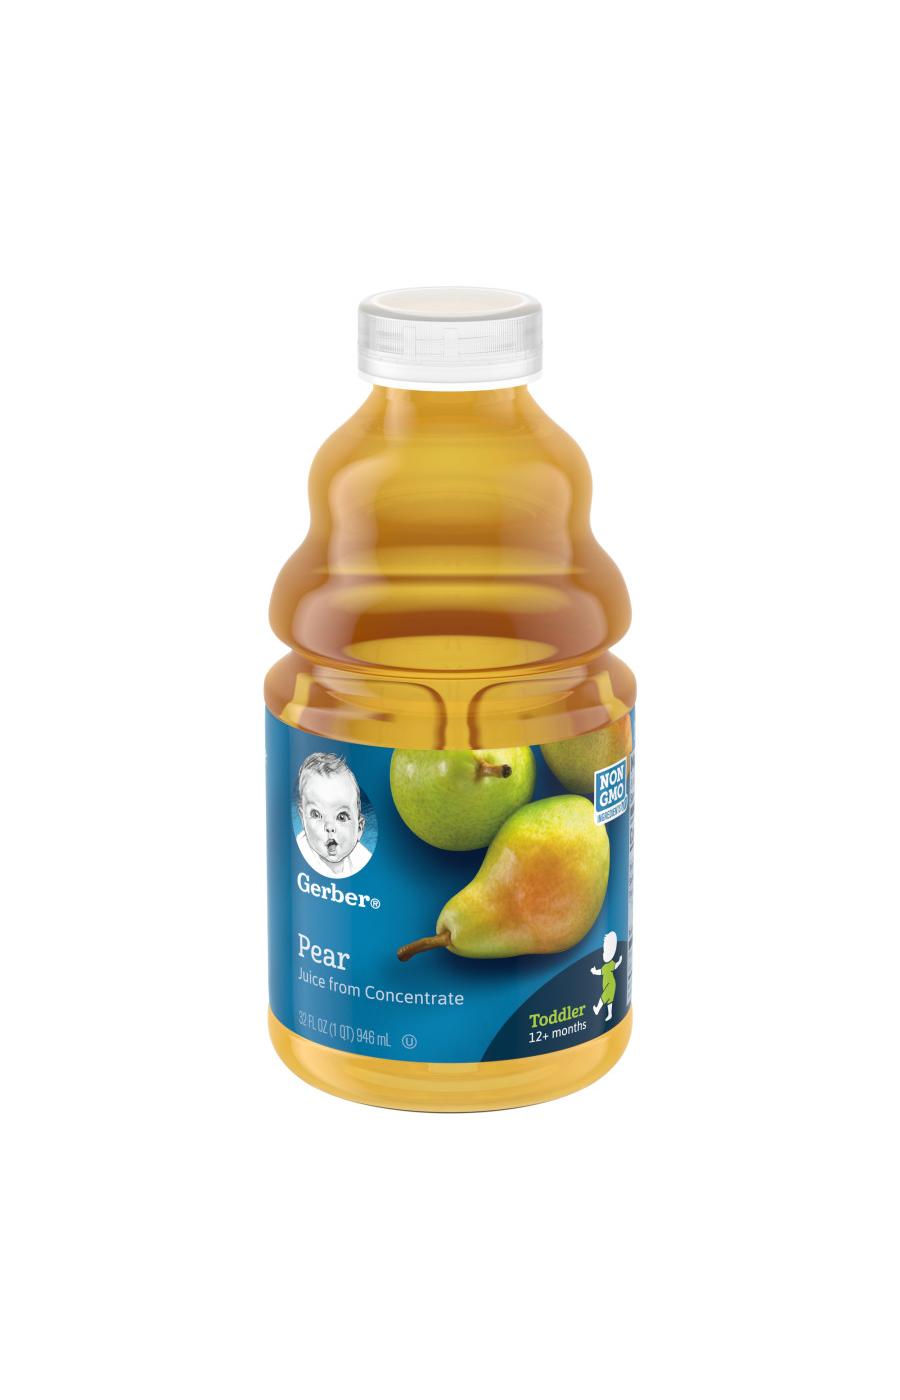 Gerber Toddler Juice - Pear; image 1 of 7